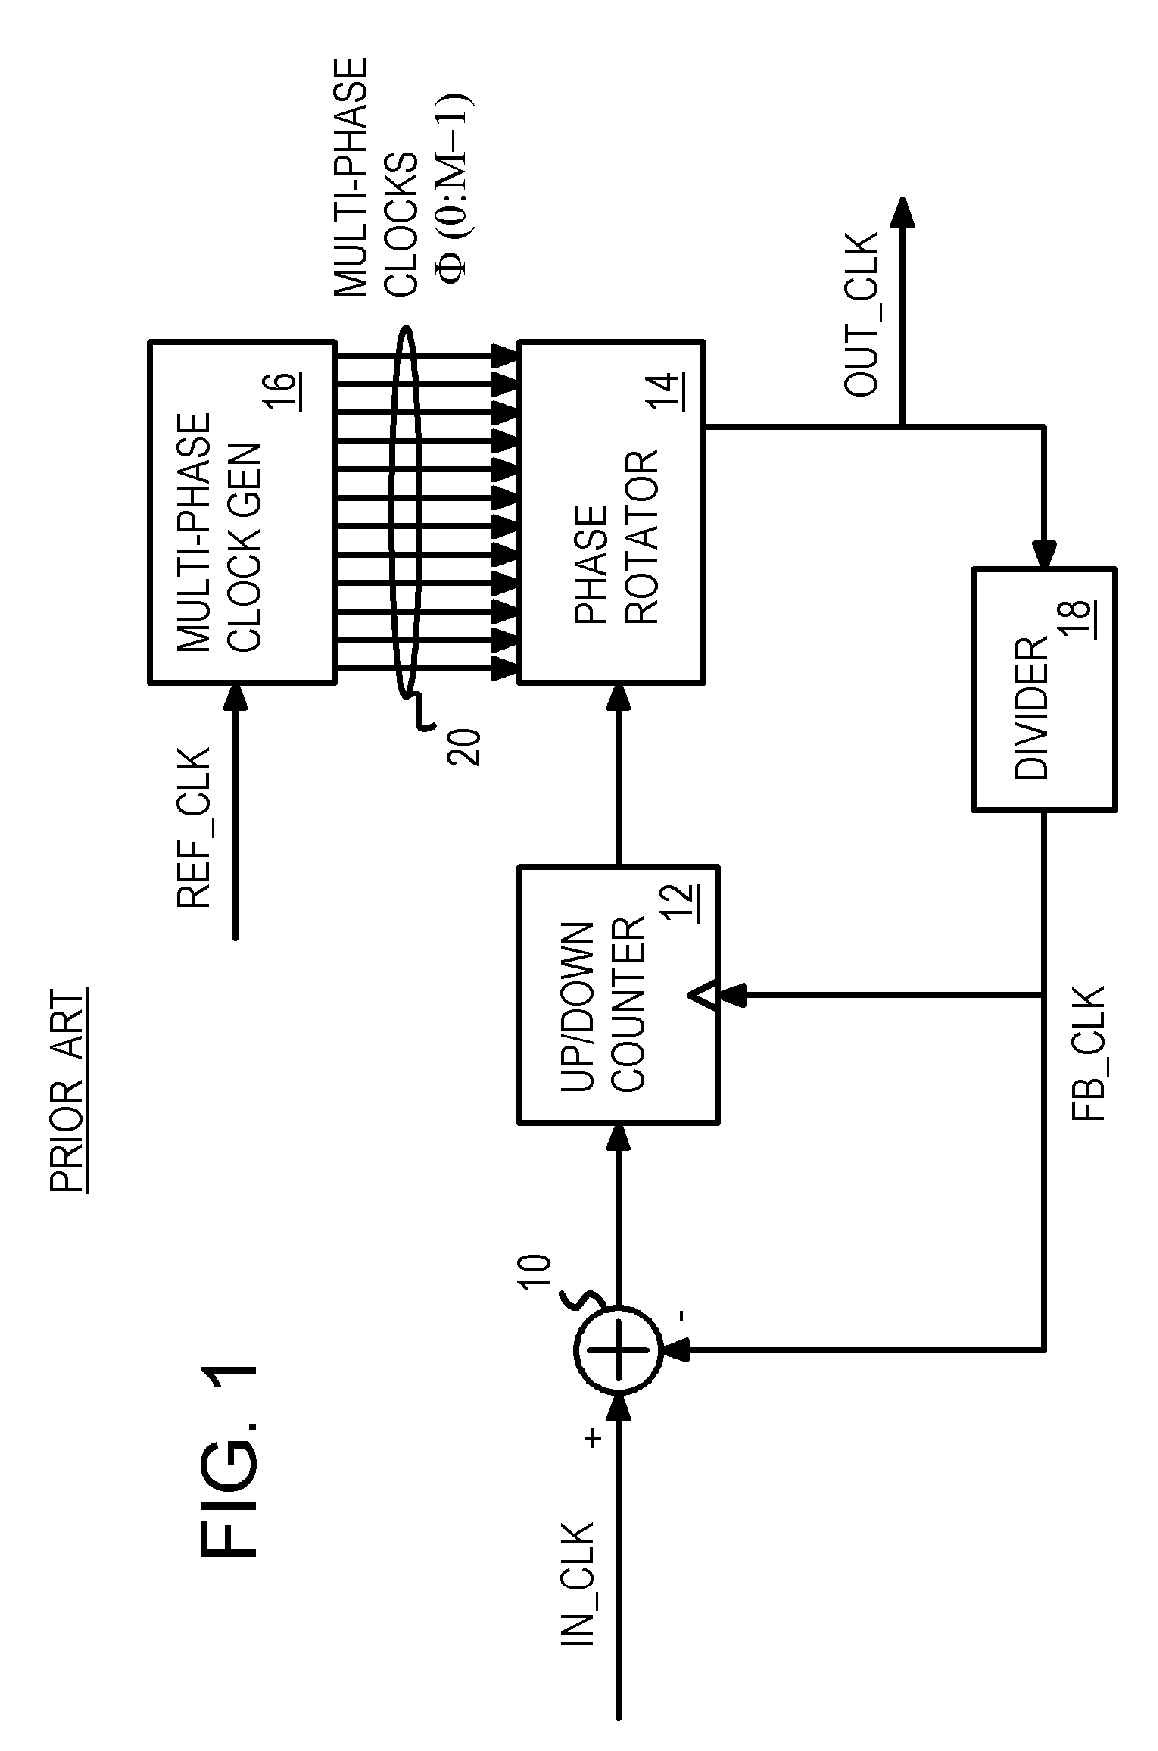 All-digital phase modulator/demodulator using multi-phase clocks and digital PLL